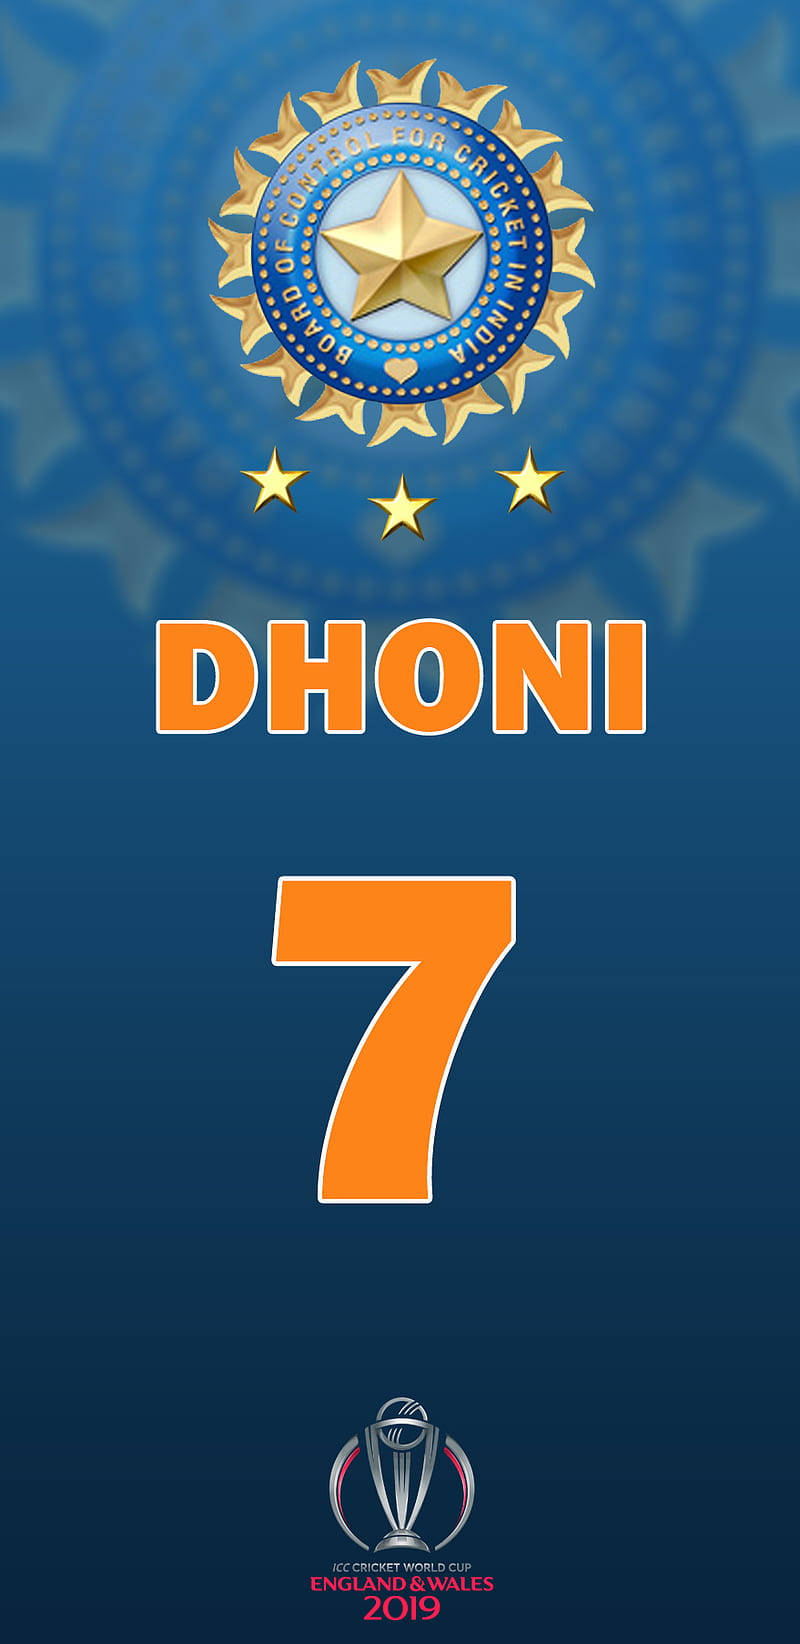 Download Dhoni 7 Iphone Wallpaper | Wallpapers.com